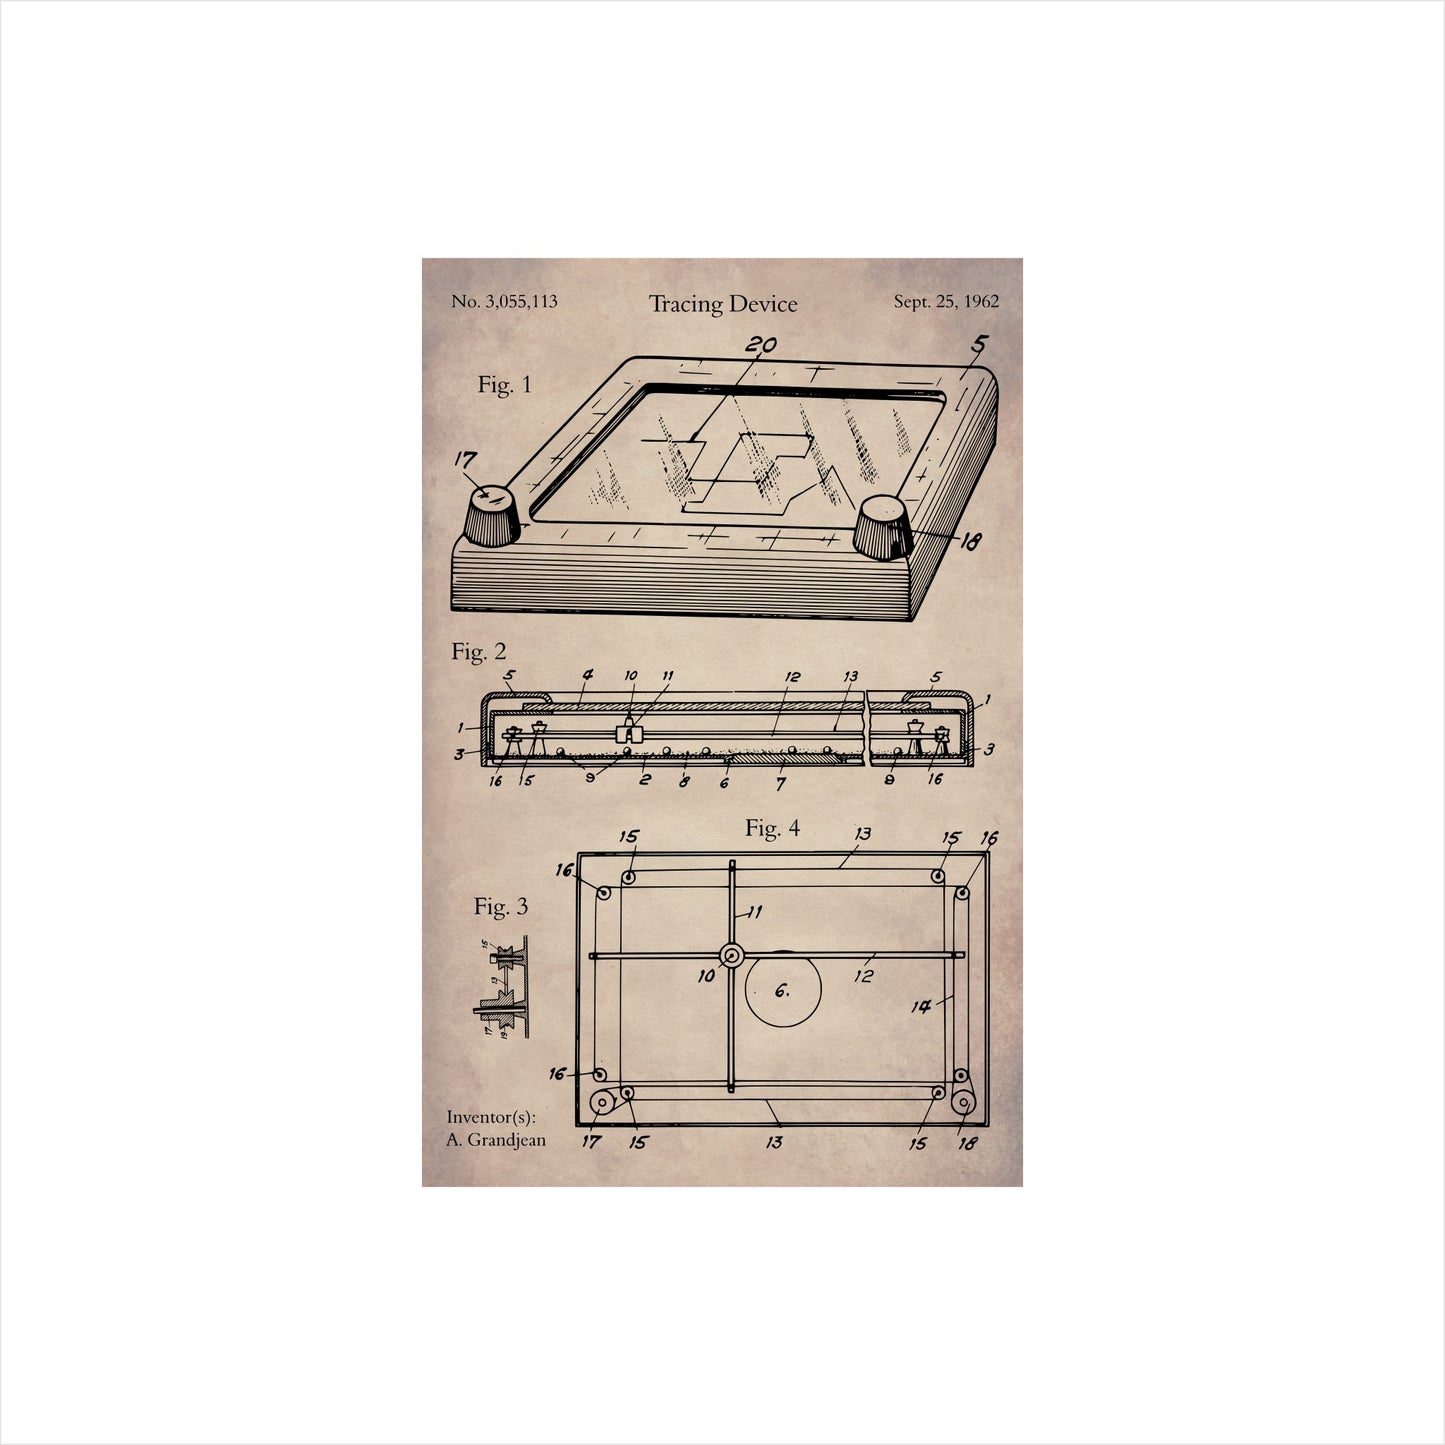 Retro Toy Tracing Device Patent Art Print